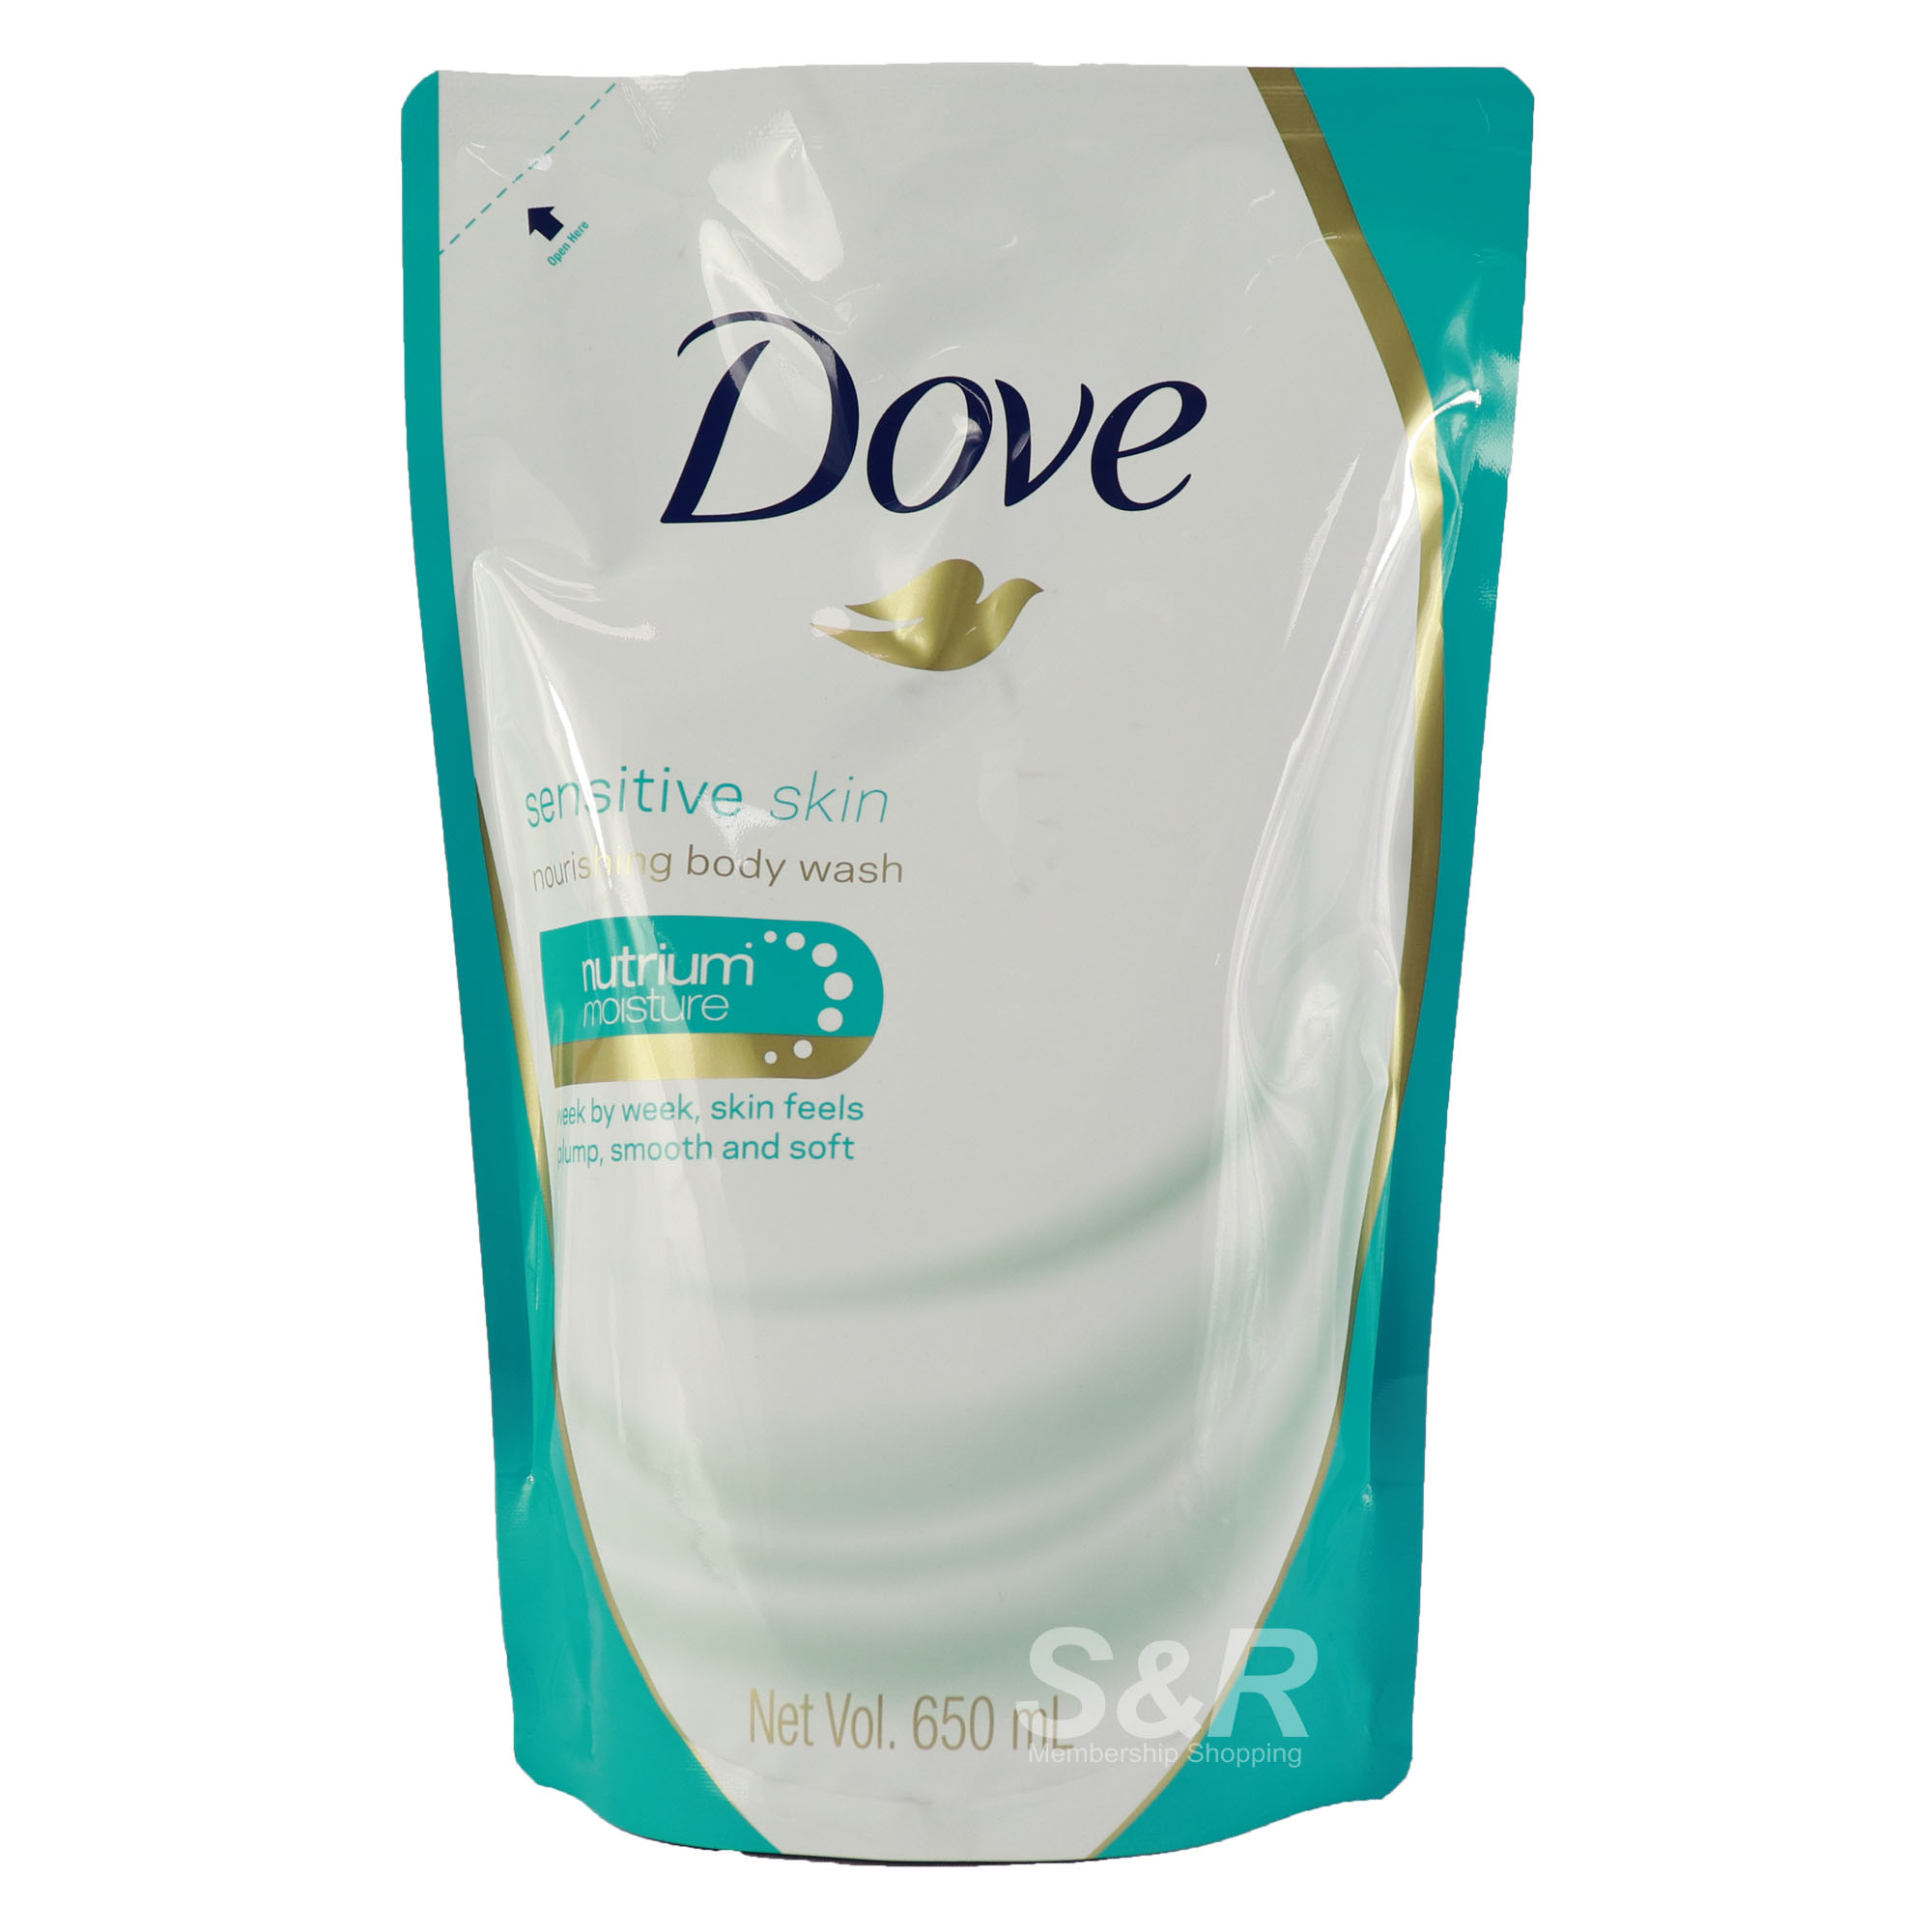 Dove Nourishing Body Wash Sensitive Skin Refill 650mL